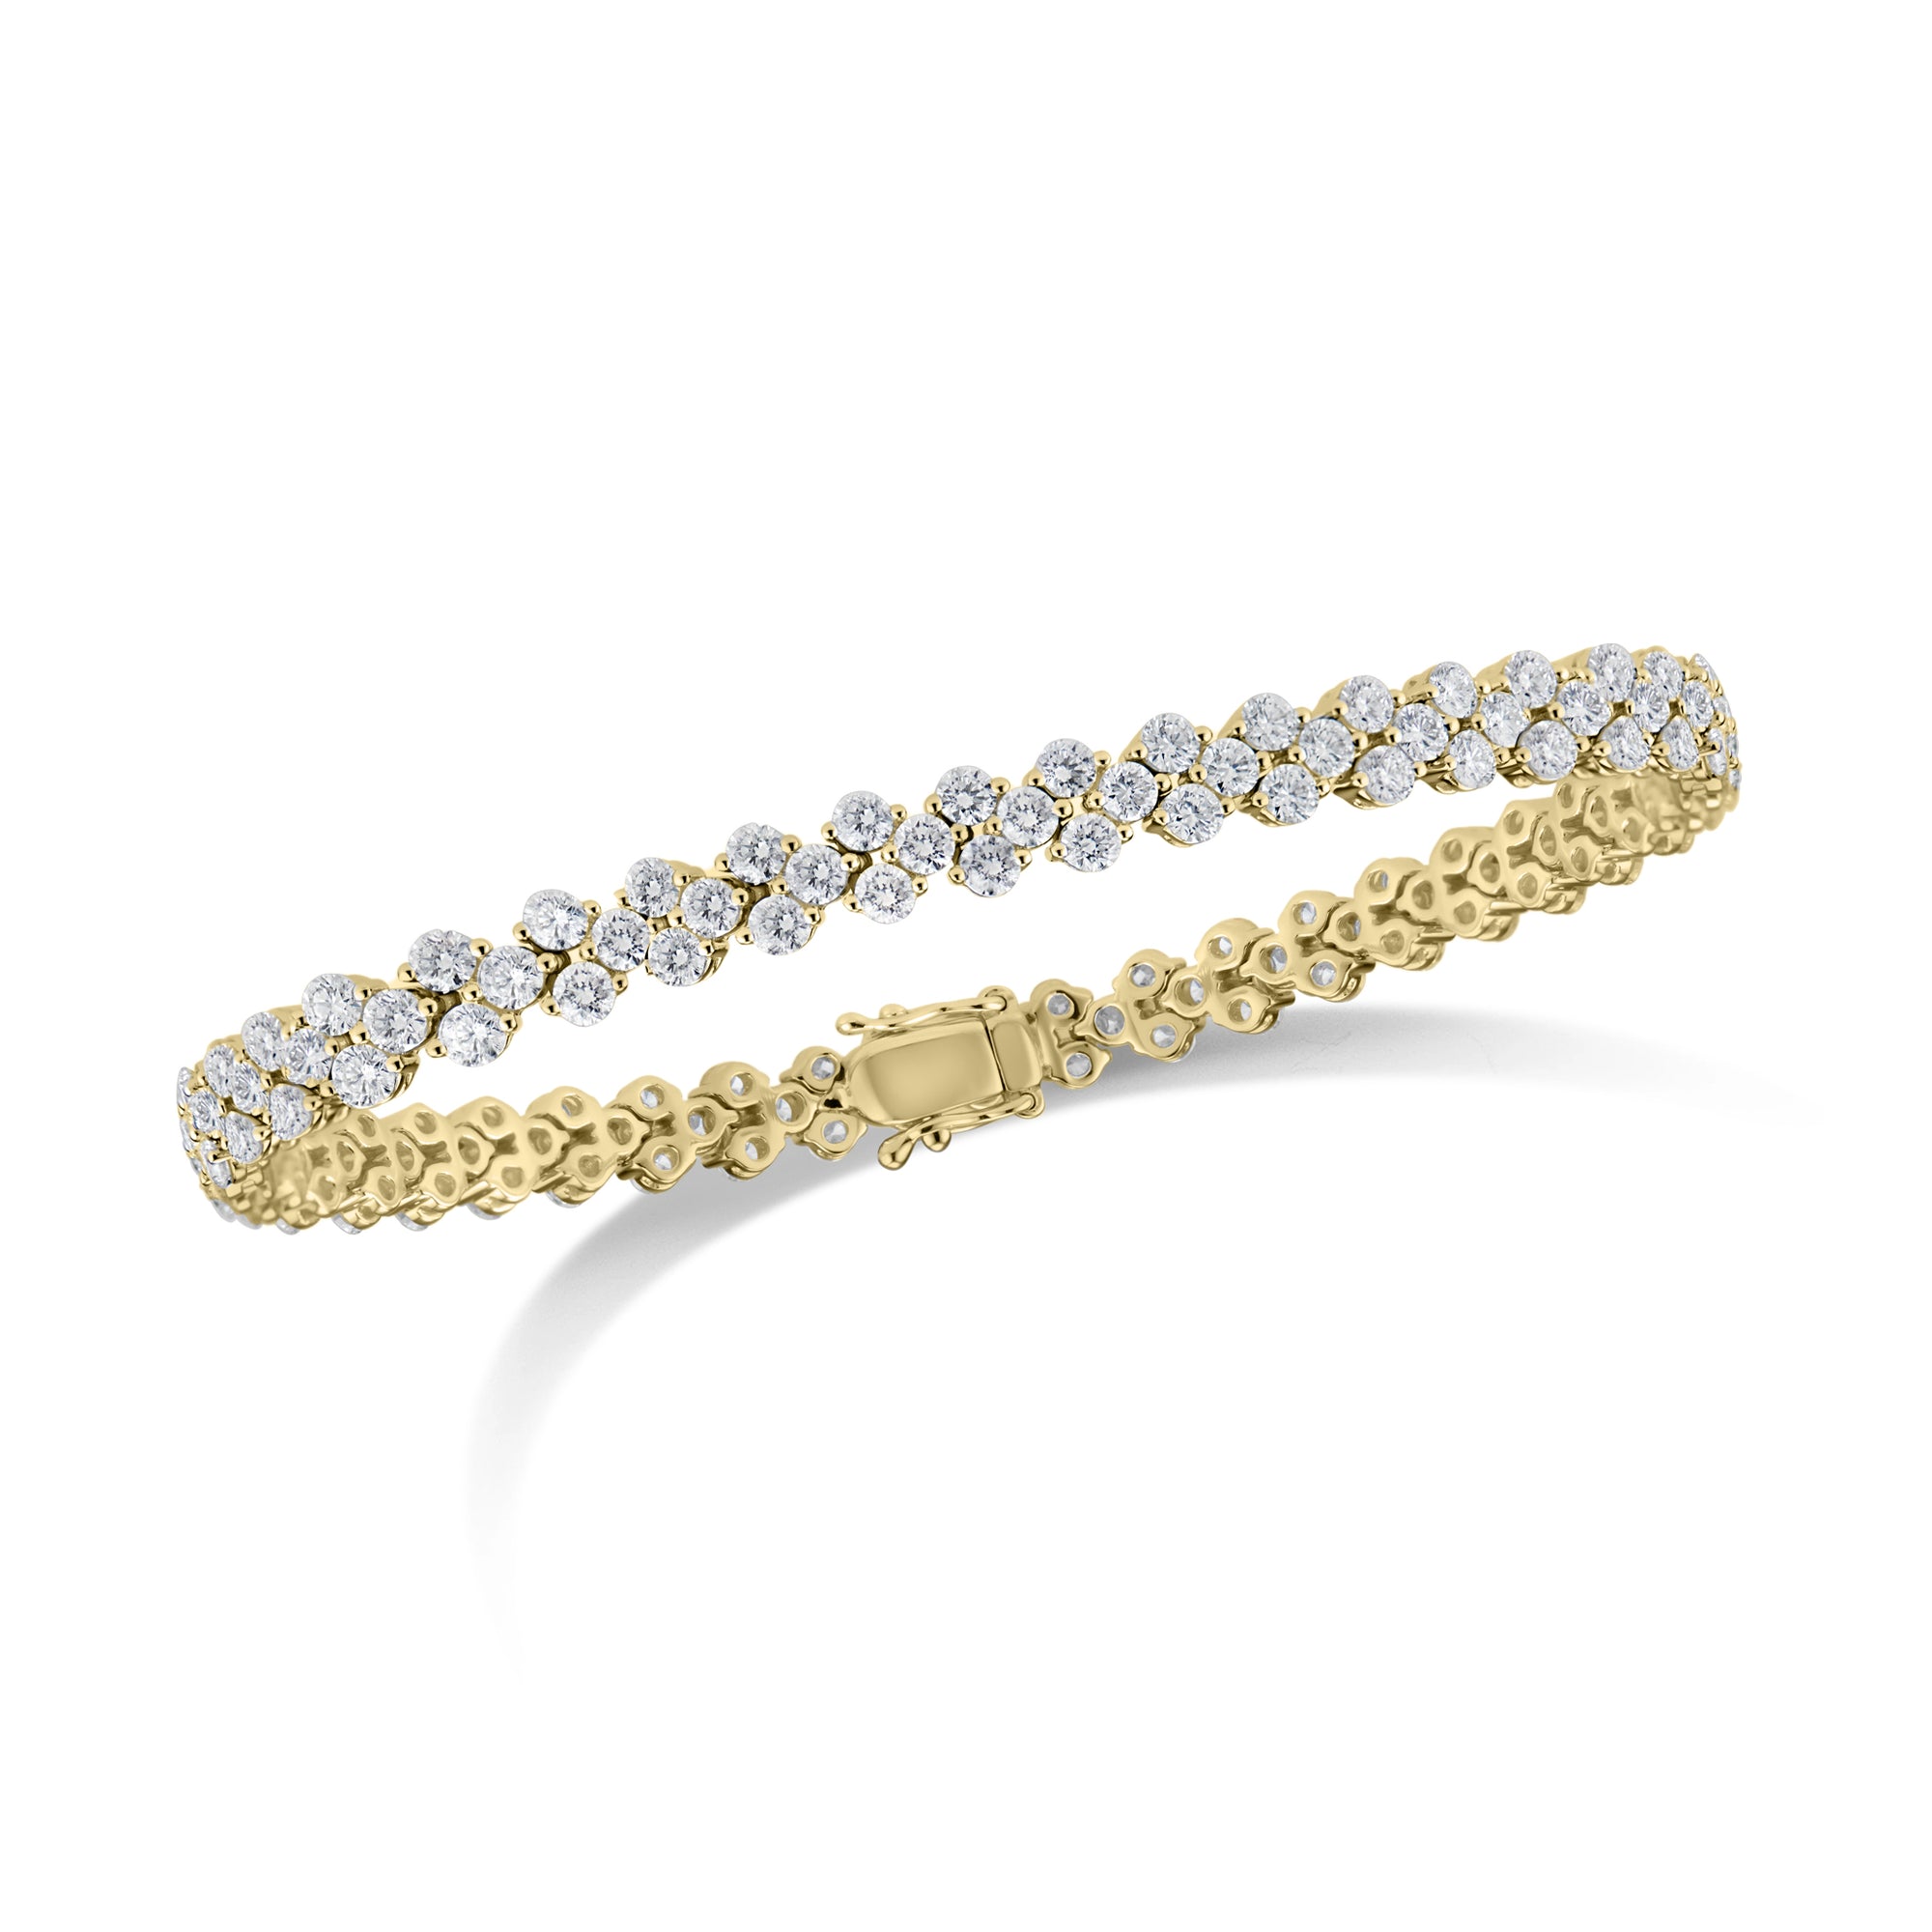 Diamond Quatrefoil Tennis Bracelet  - 18K gold weighing 12.62 grams  - 141 round diamonds totaling 5.64 carats